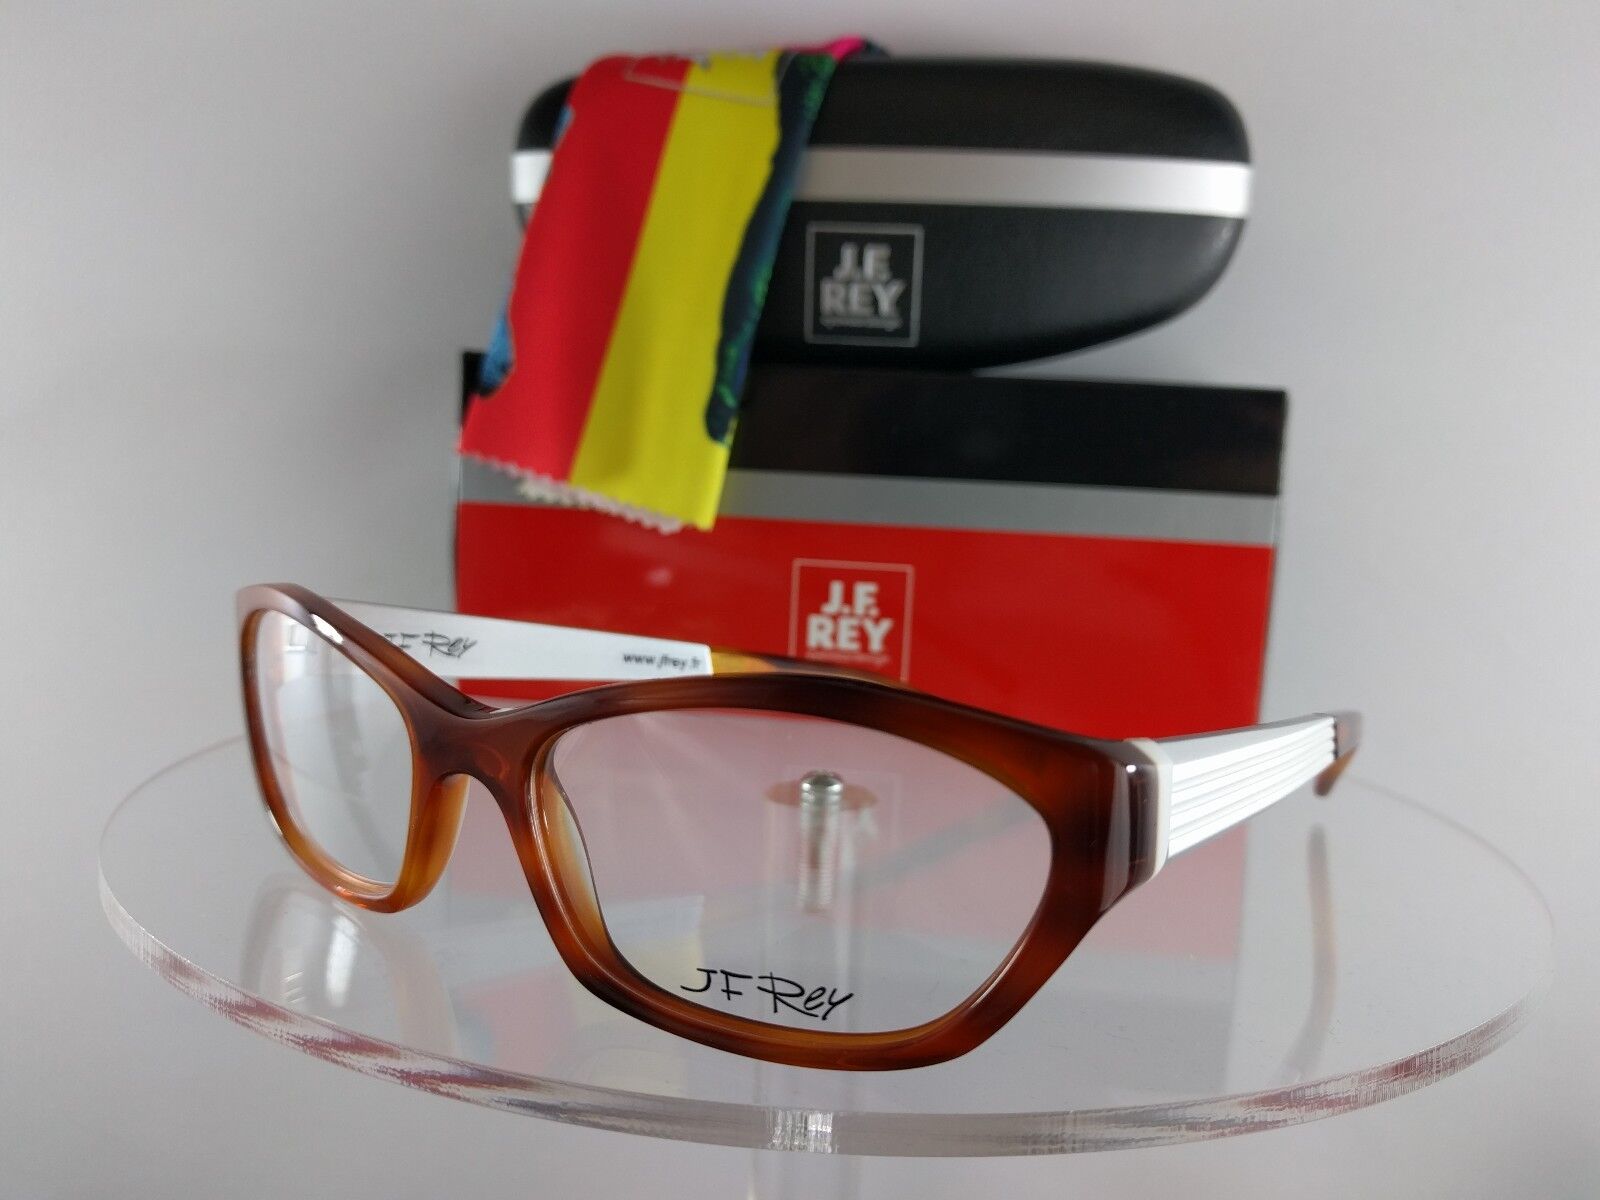 Brand New Authentic J.F. REY Eyeglasses JF1218 9010  54.5mm 1218